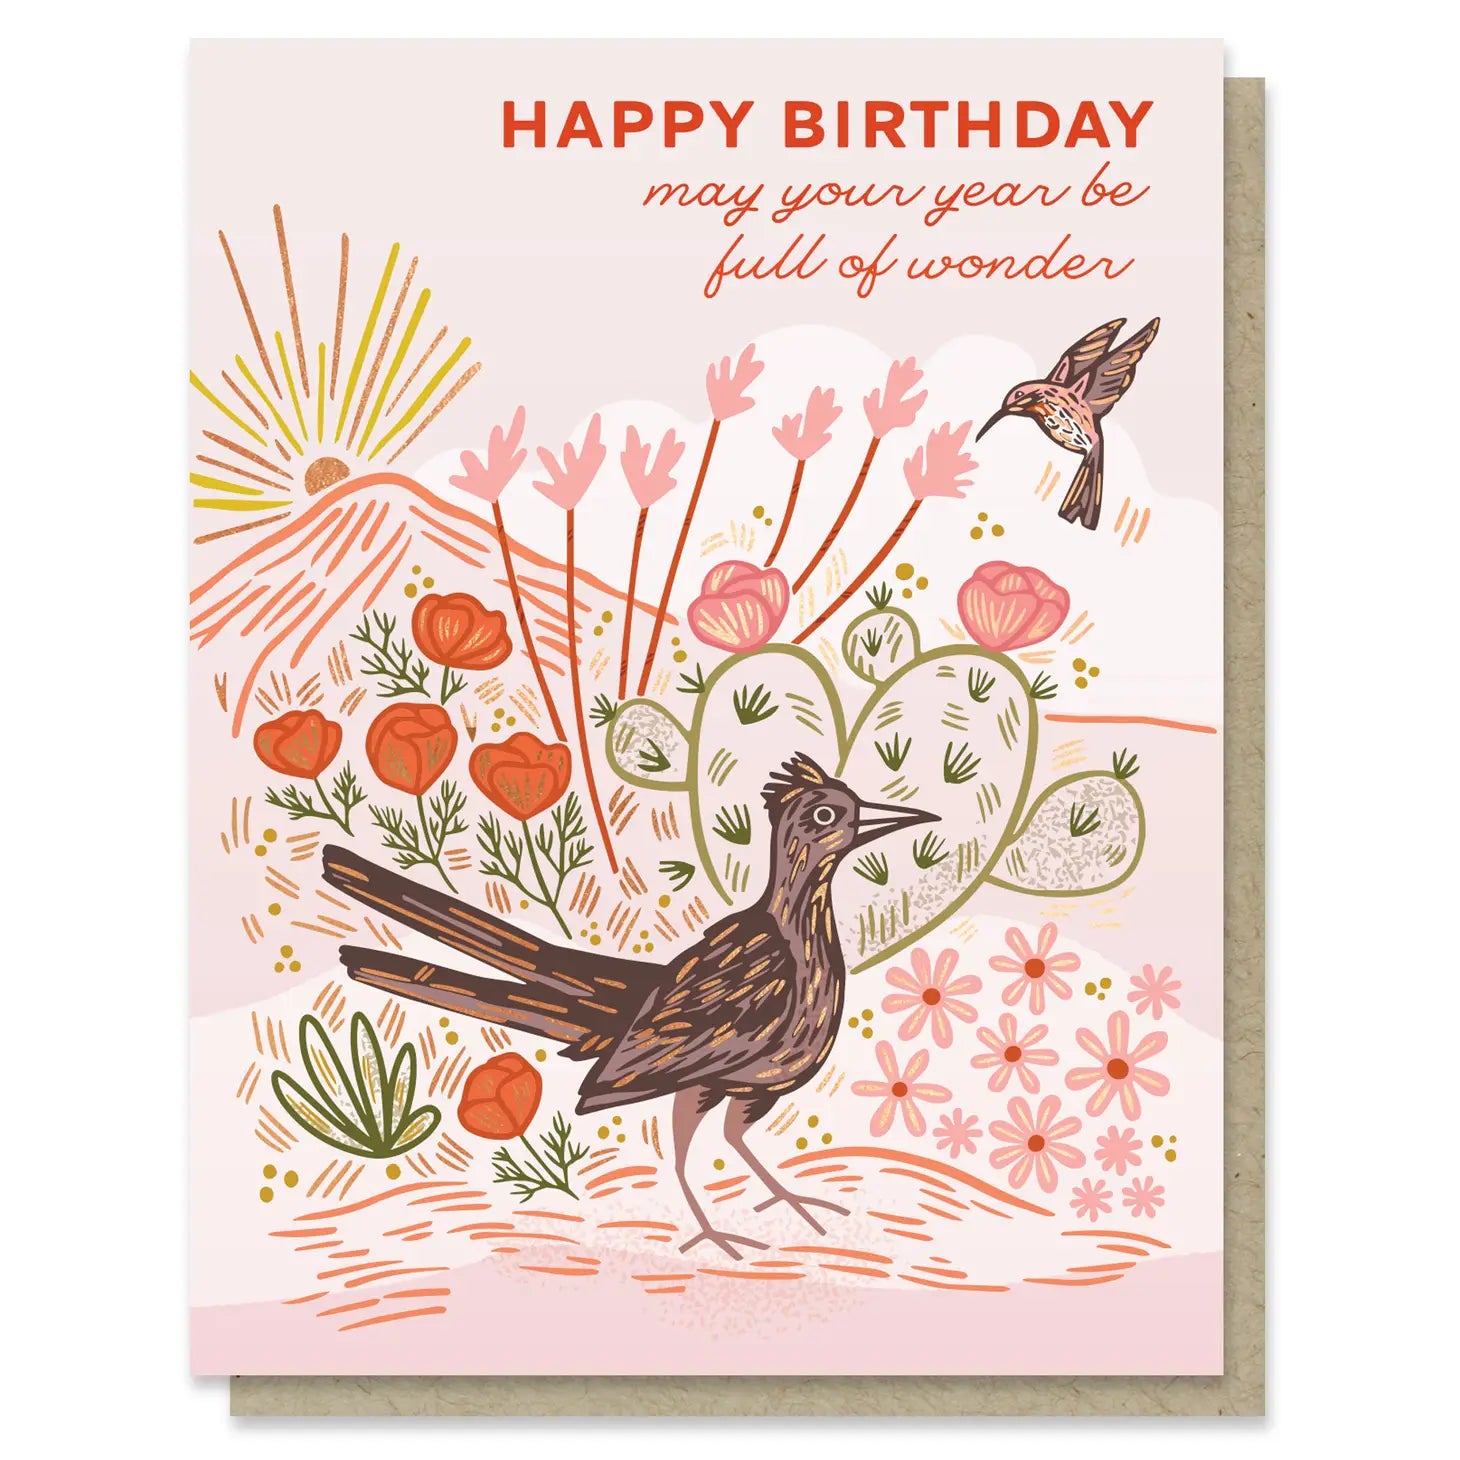 Paper Parasol Press Greeting Card - Roadrunner Ranch Birthday